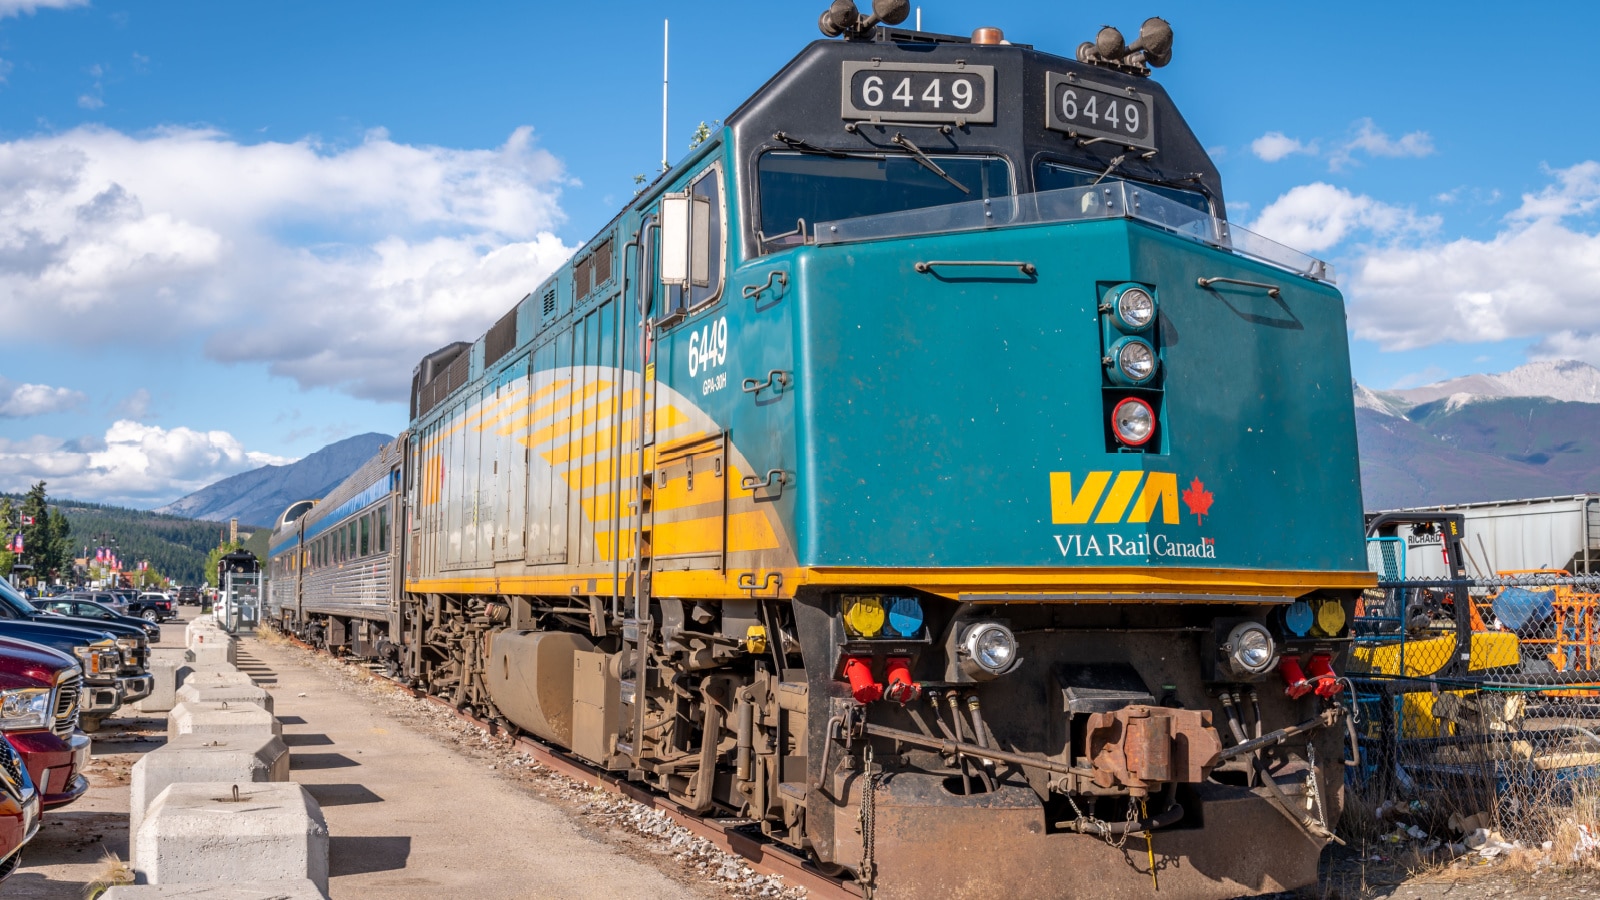 Jasper, Alberta - August 3, 2020: A VIA Rail train located at the train station in Jasper.